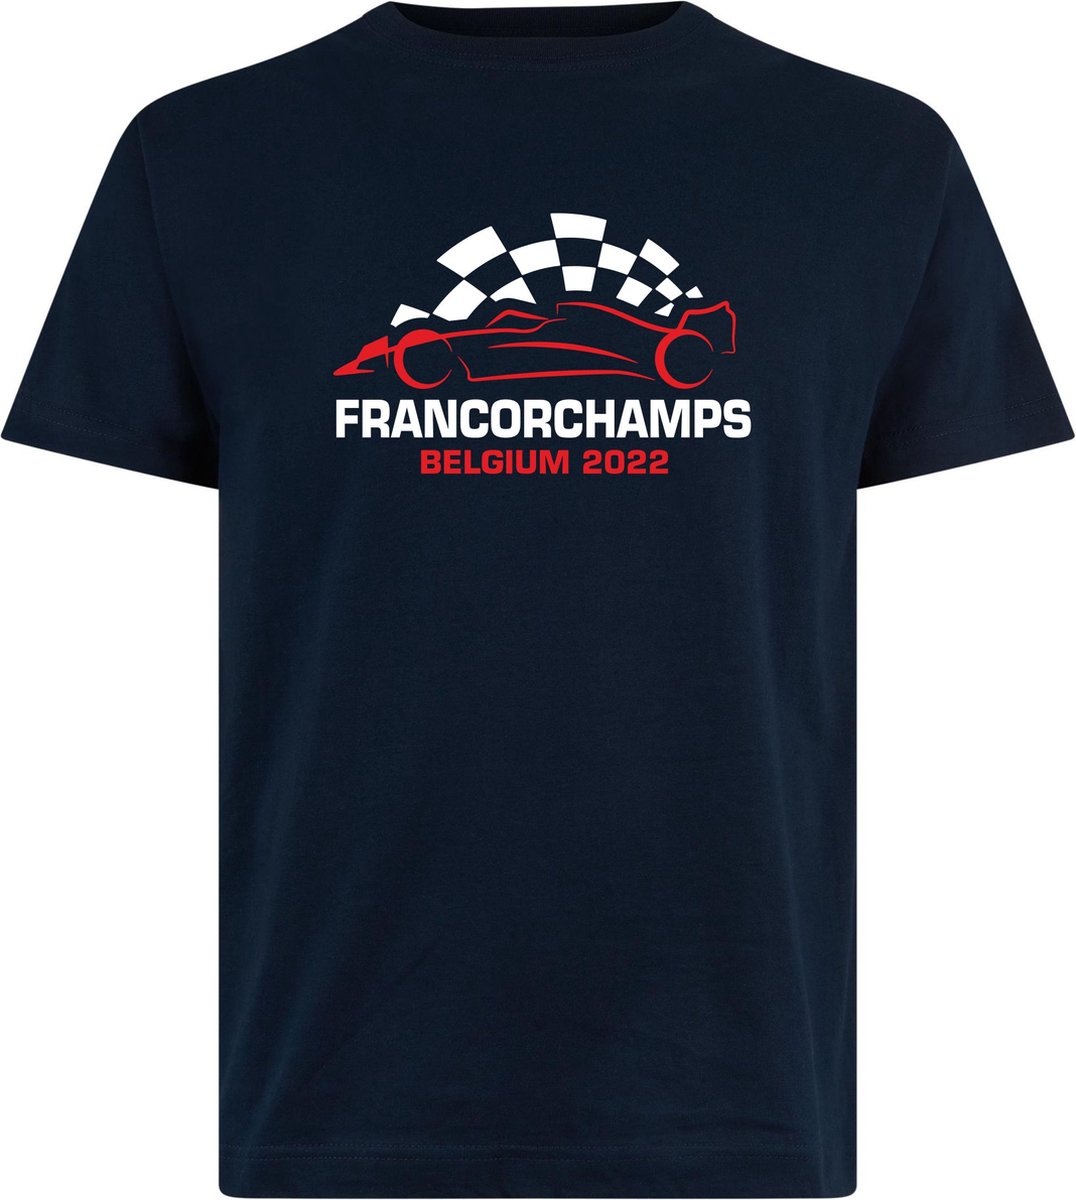 T-shirt Francorchamps Belgium 2022 met raceauto | Max Verstappen / Red Bull Racing / Formule 1 fan | Grand Prix Circuit Spa-Francorchamps | kleding shirt | Navy | maat S